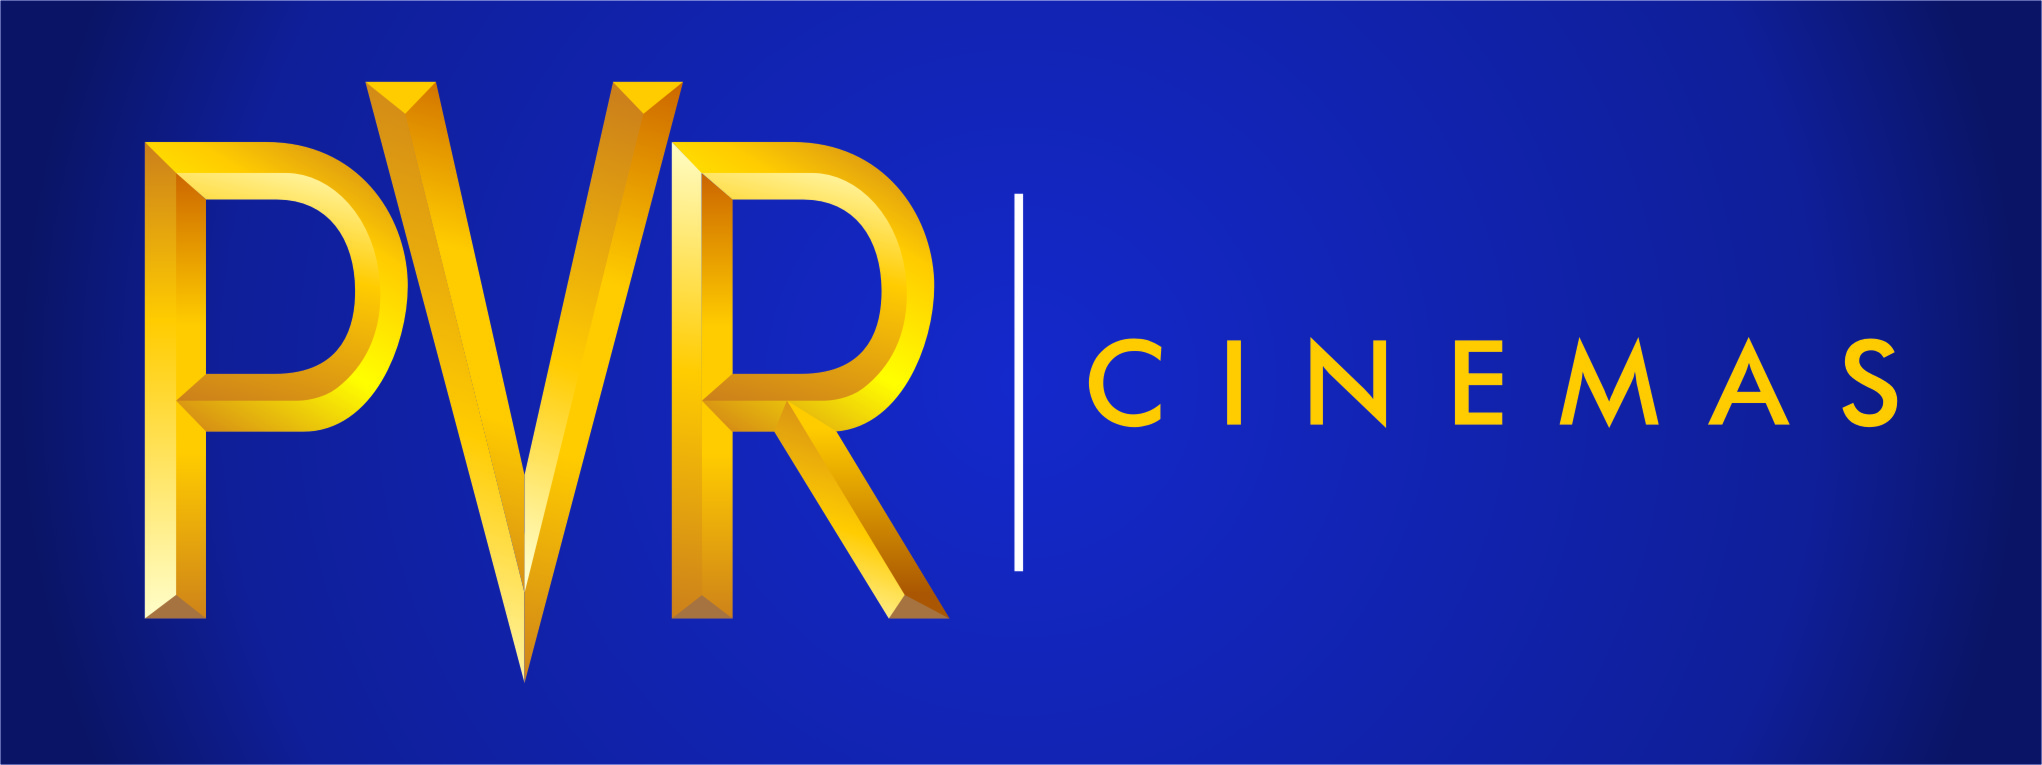 PVR cinema axis Pay UPI Offer